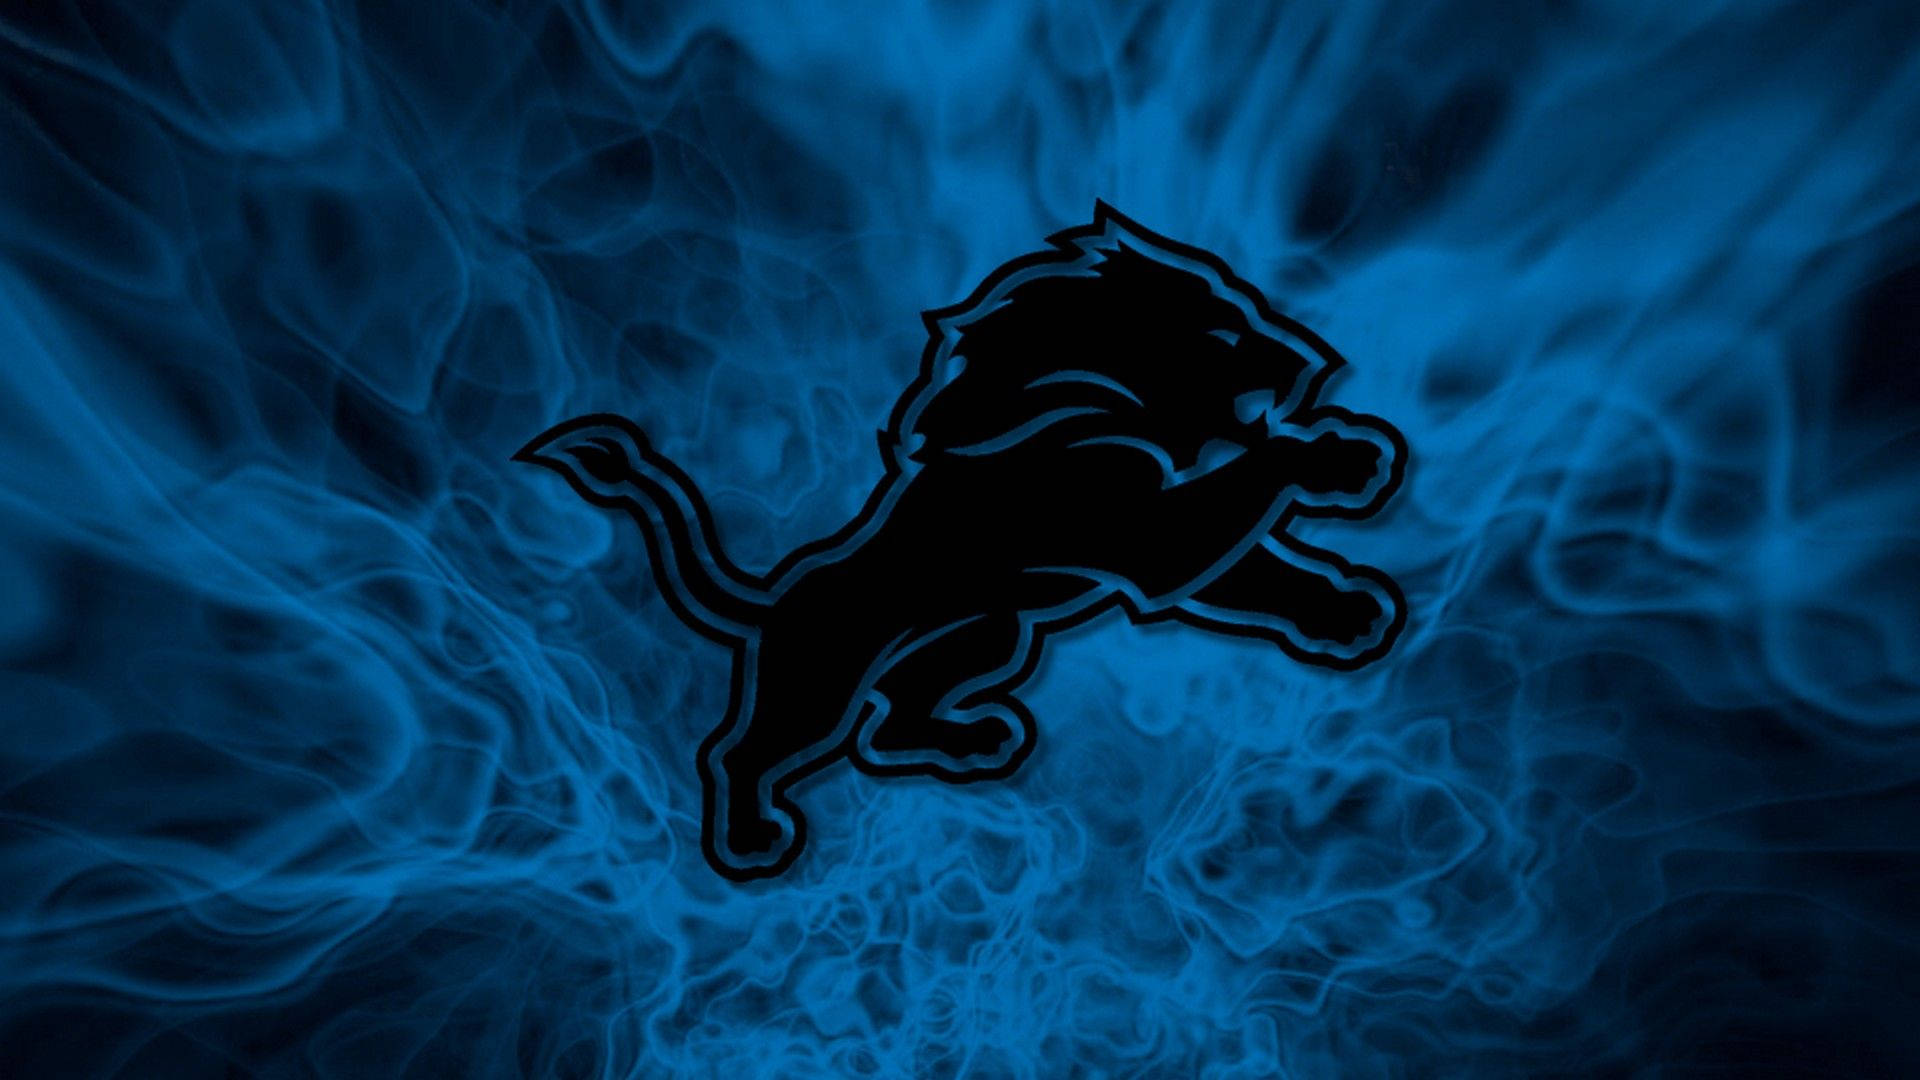 detroit lions new logo wallpaper